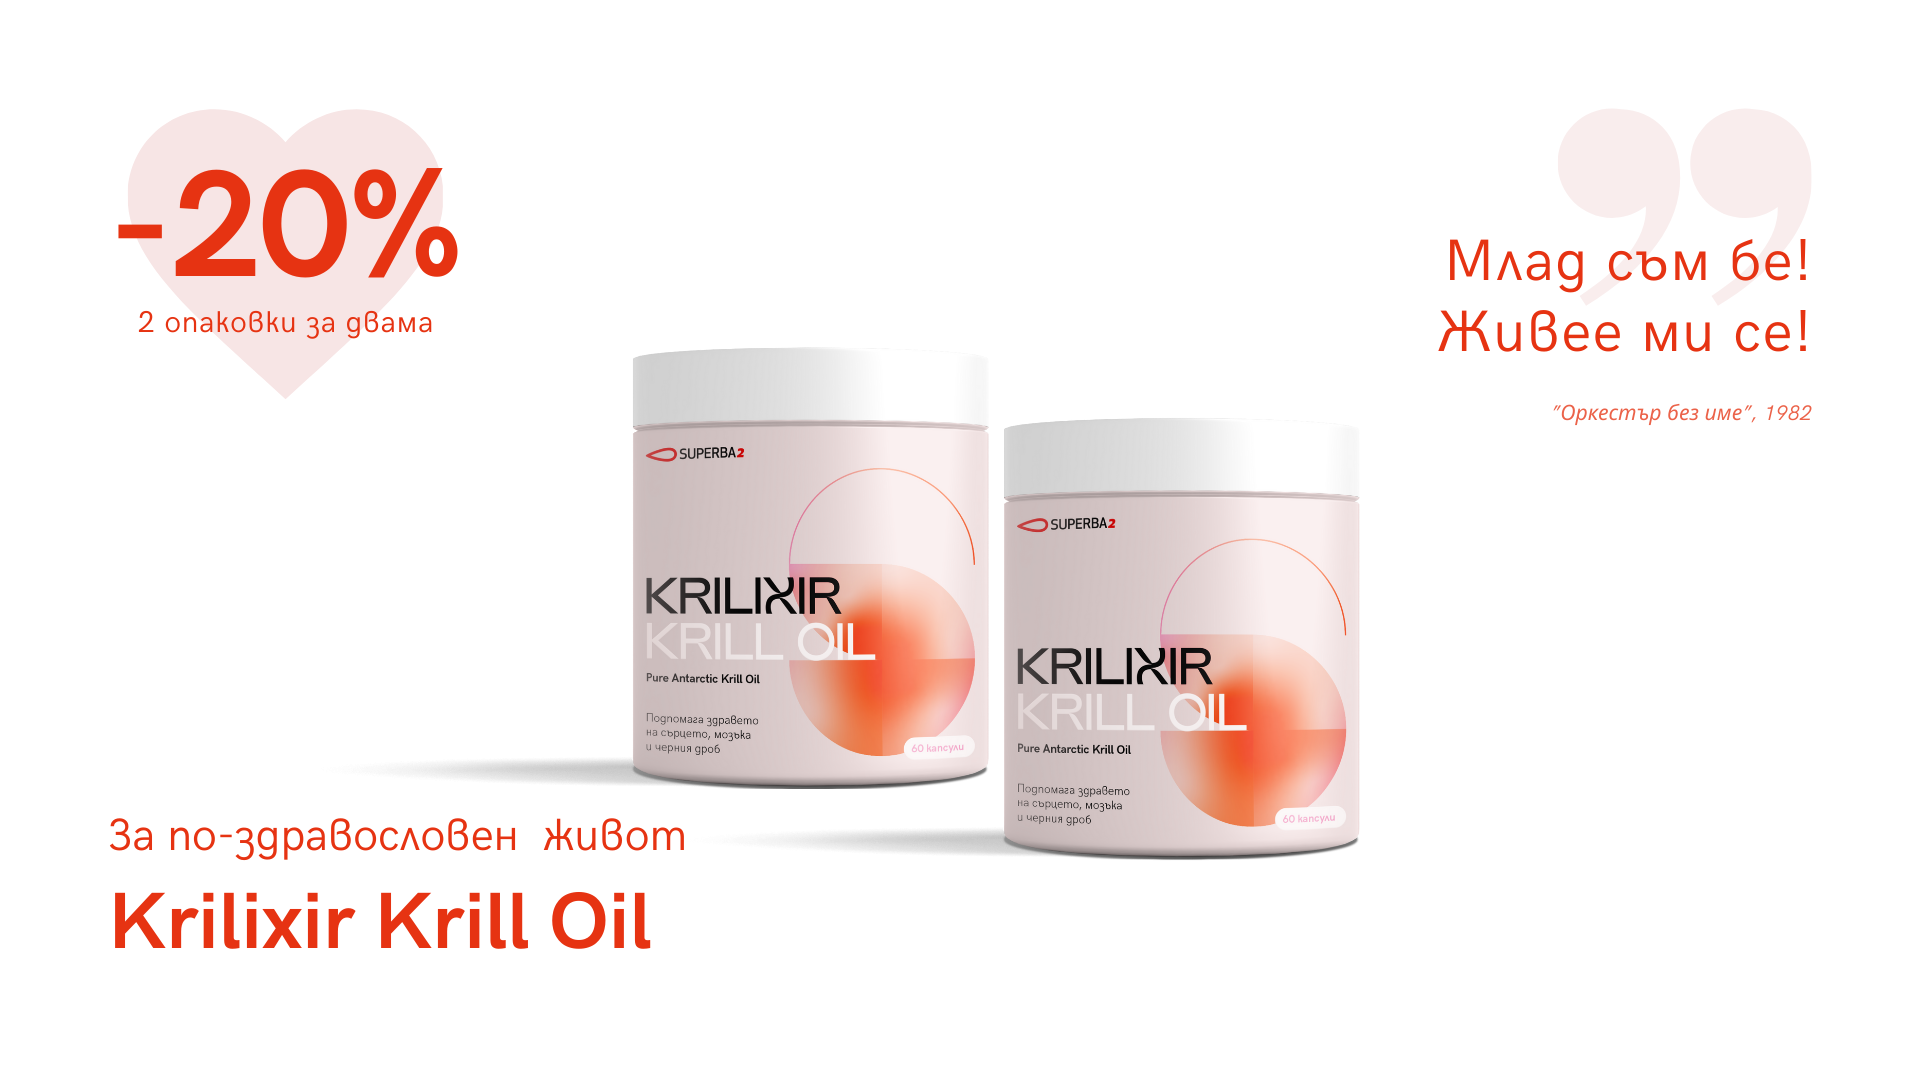 Krilixir Krill oil - комплект 2 опаковки